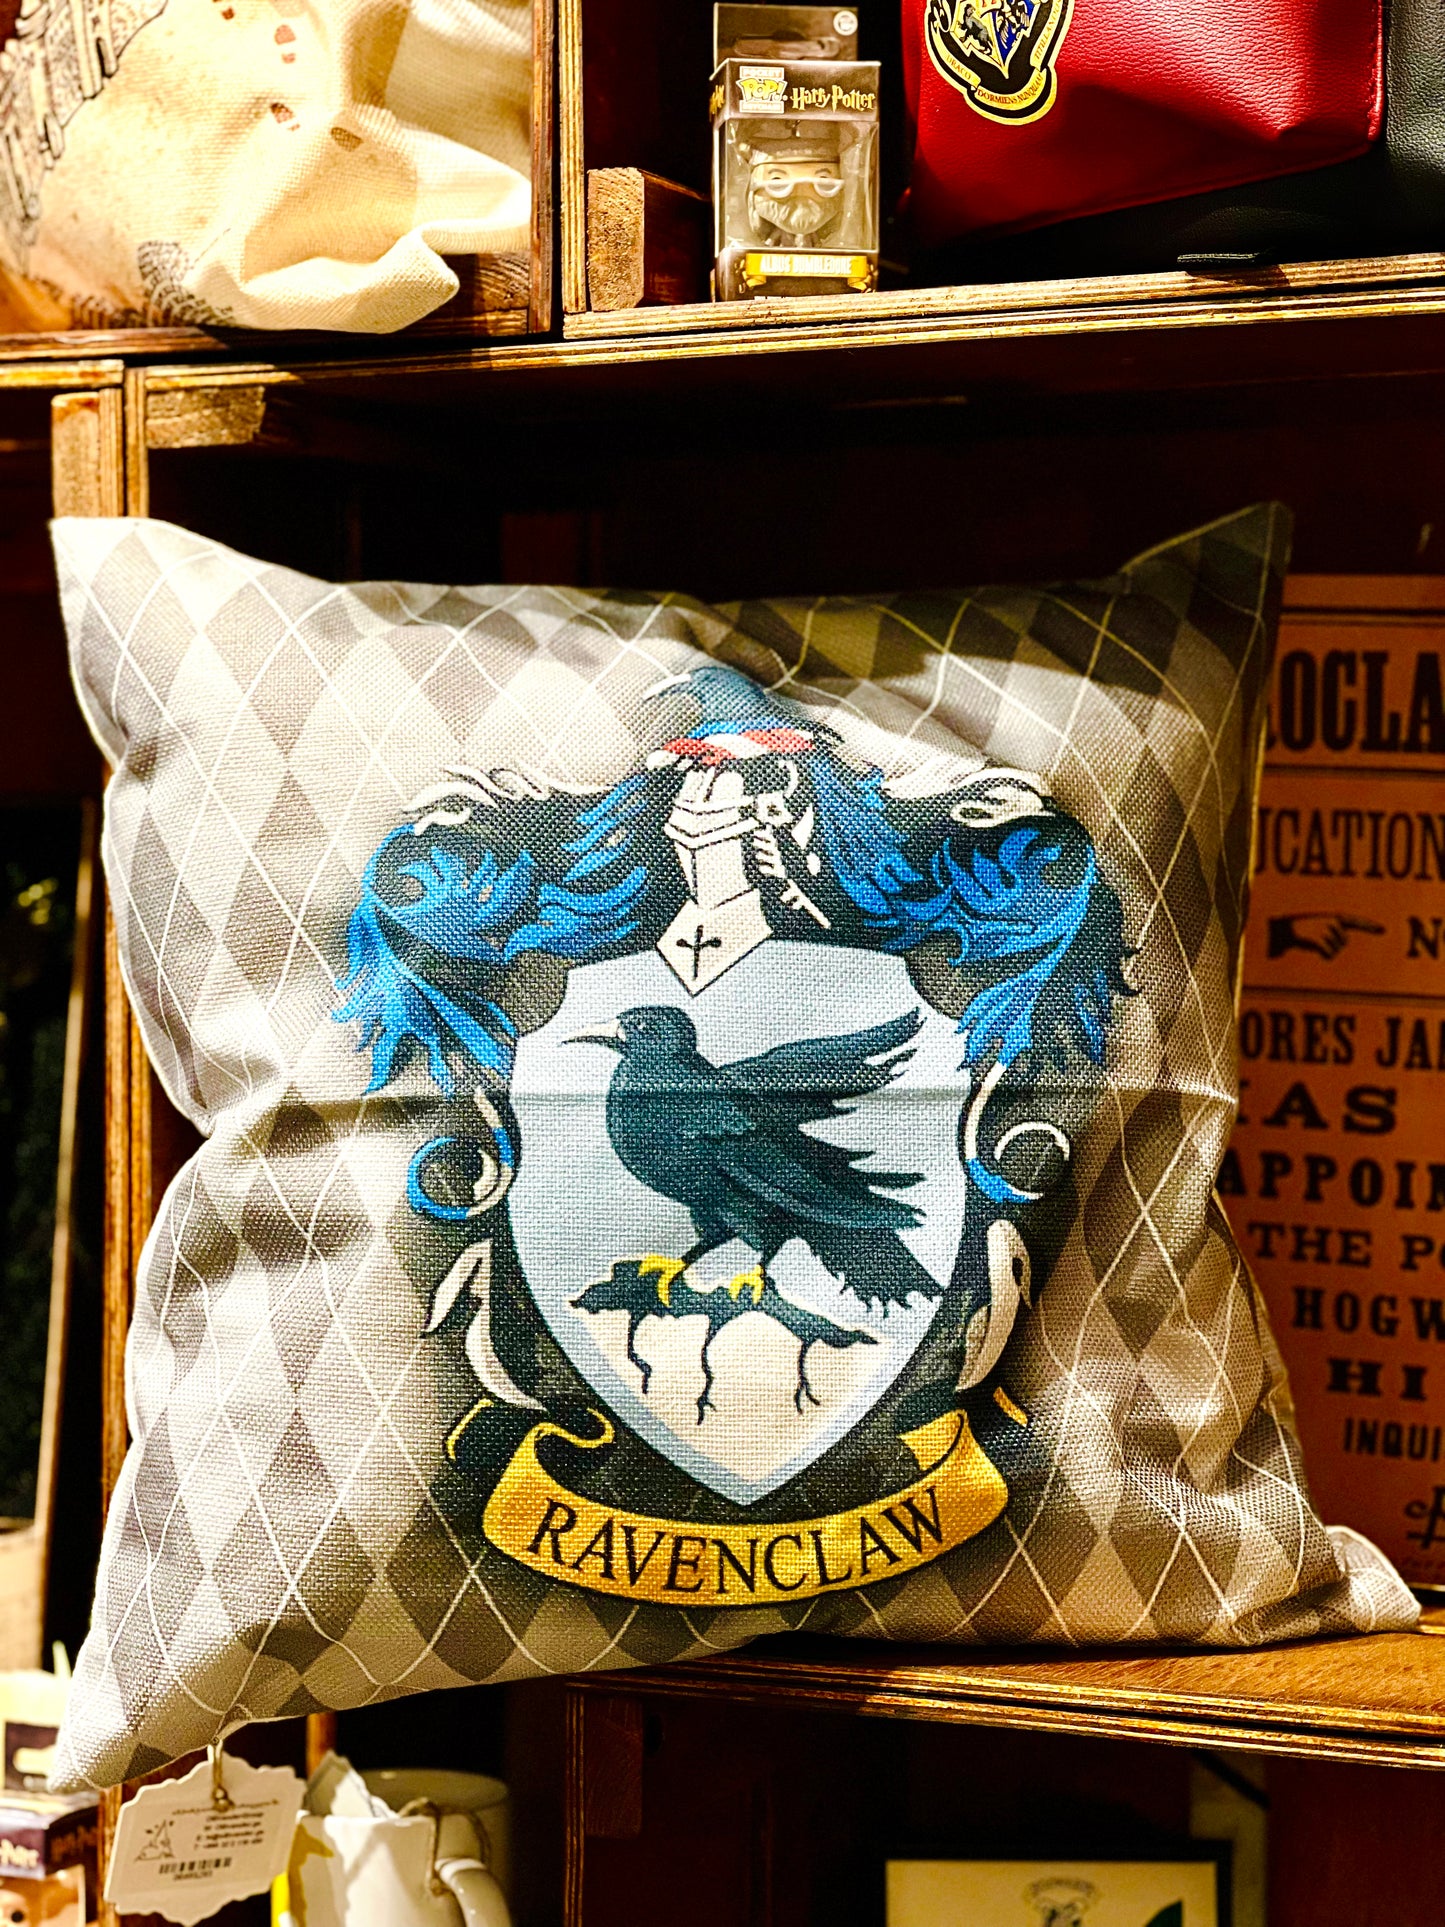 Ravenclaw Pillow